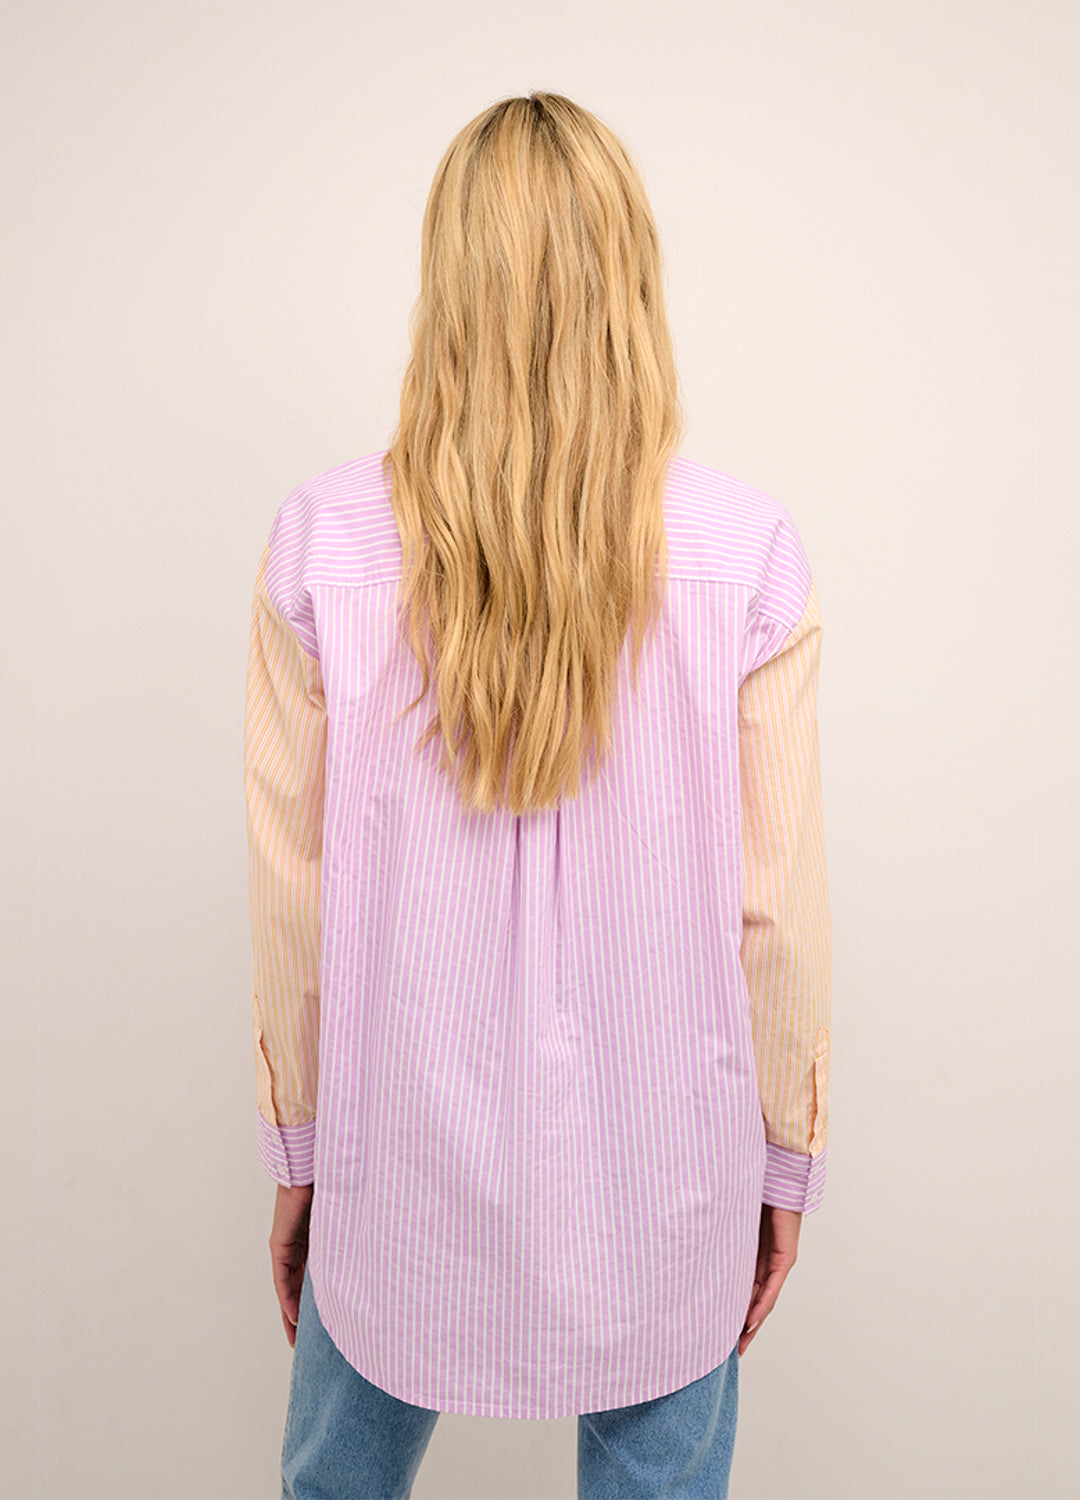 Kacala Shirt - Lupine and Nectarine Mix Stripe